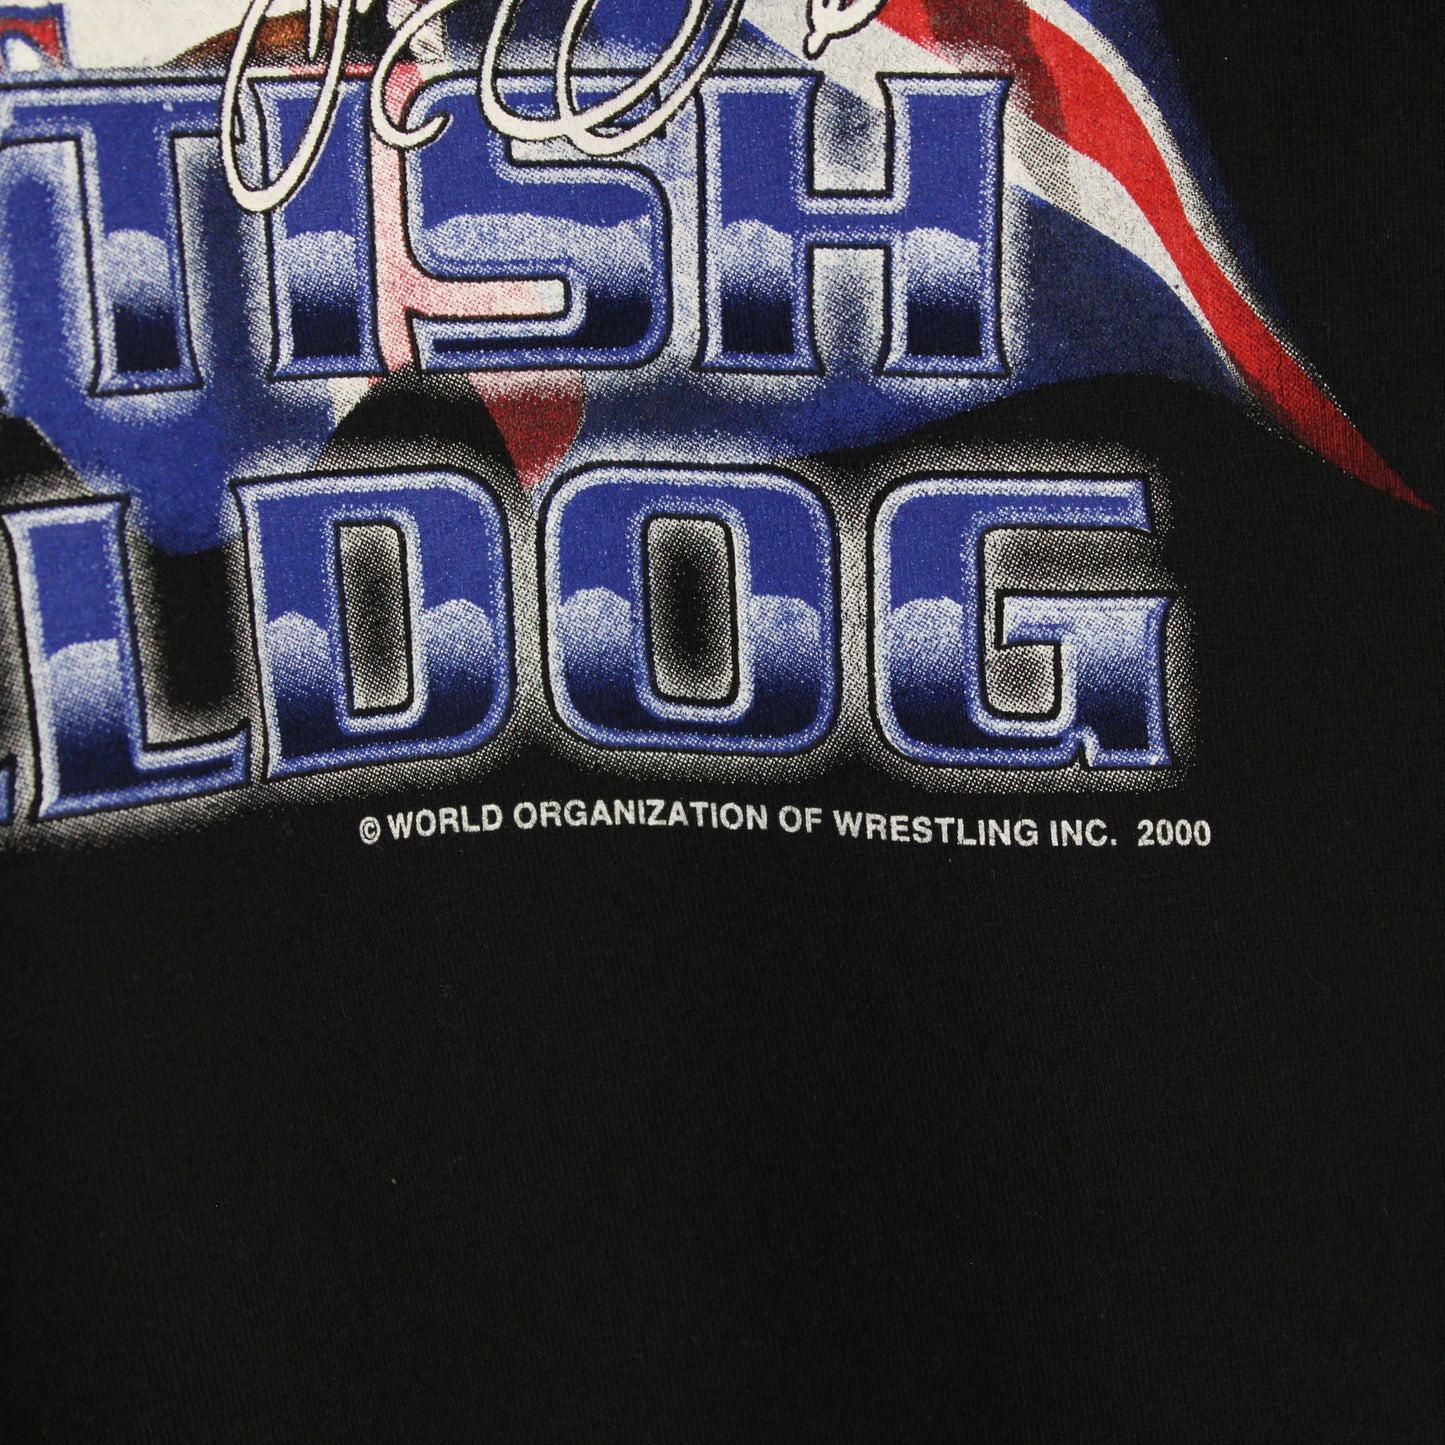 Vintage 2000 British Bulldog Davey Boy Smith Wrestling Tee - L